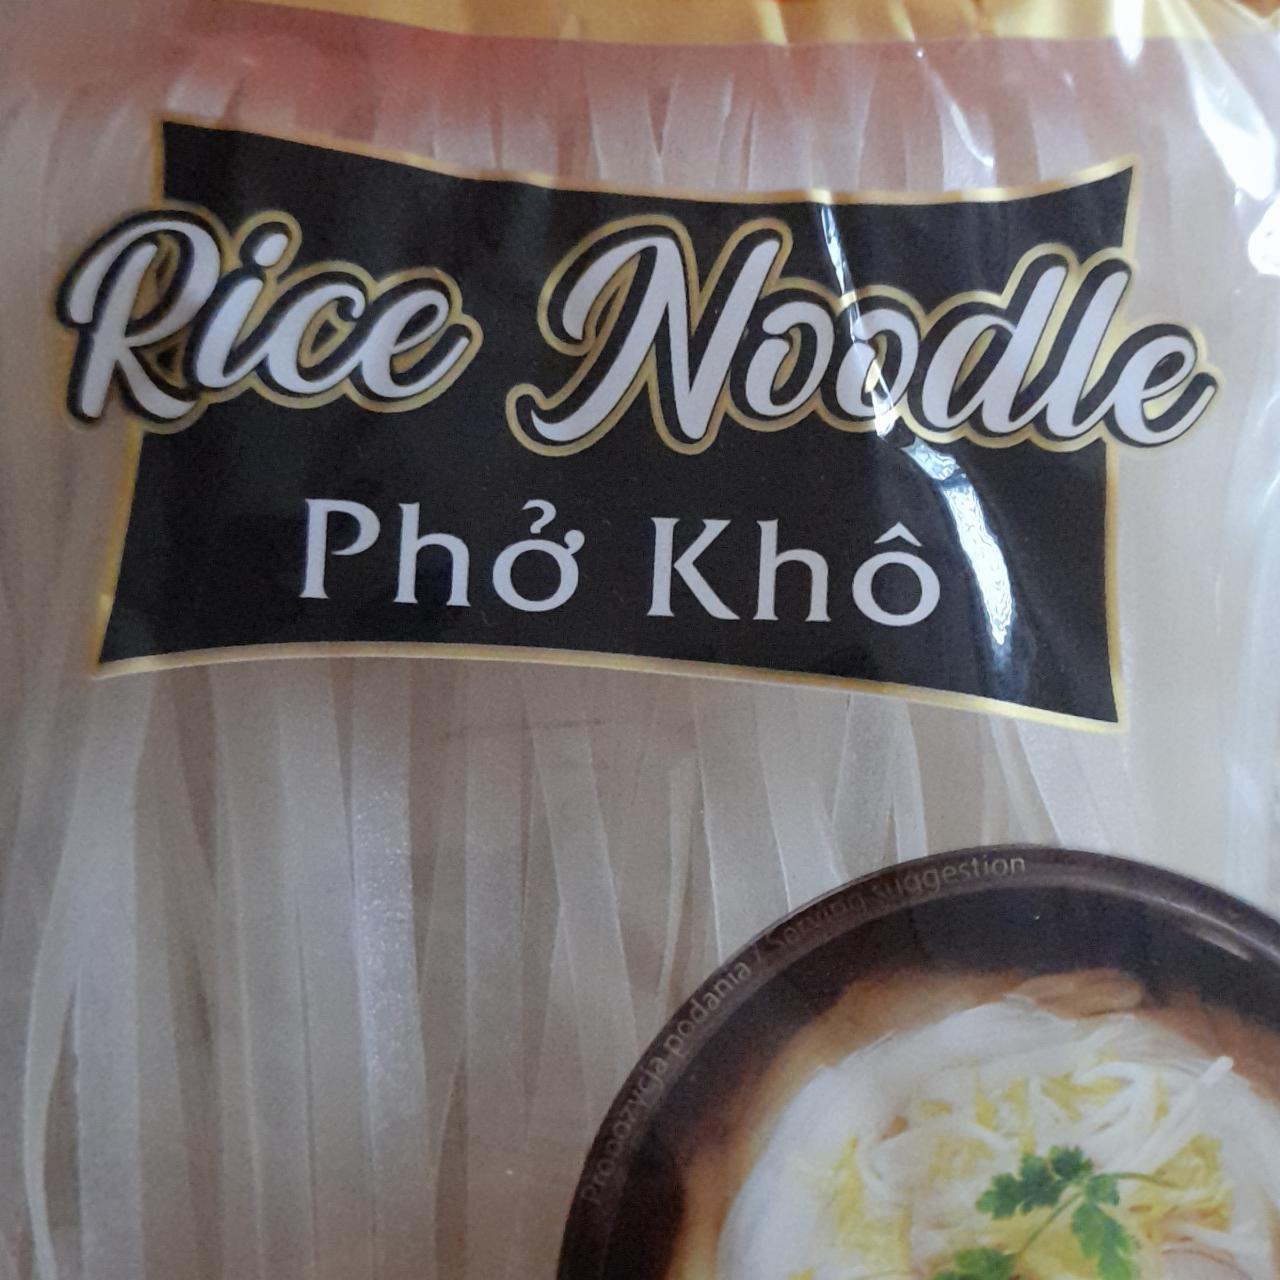 Fotografie - Rice Noodle Pho Kho